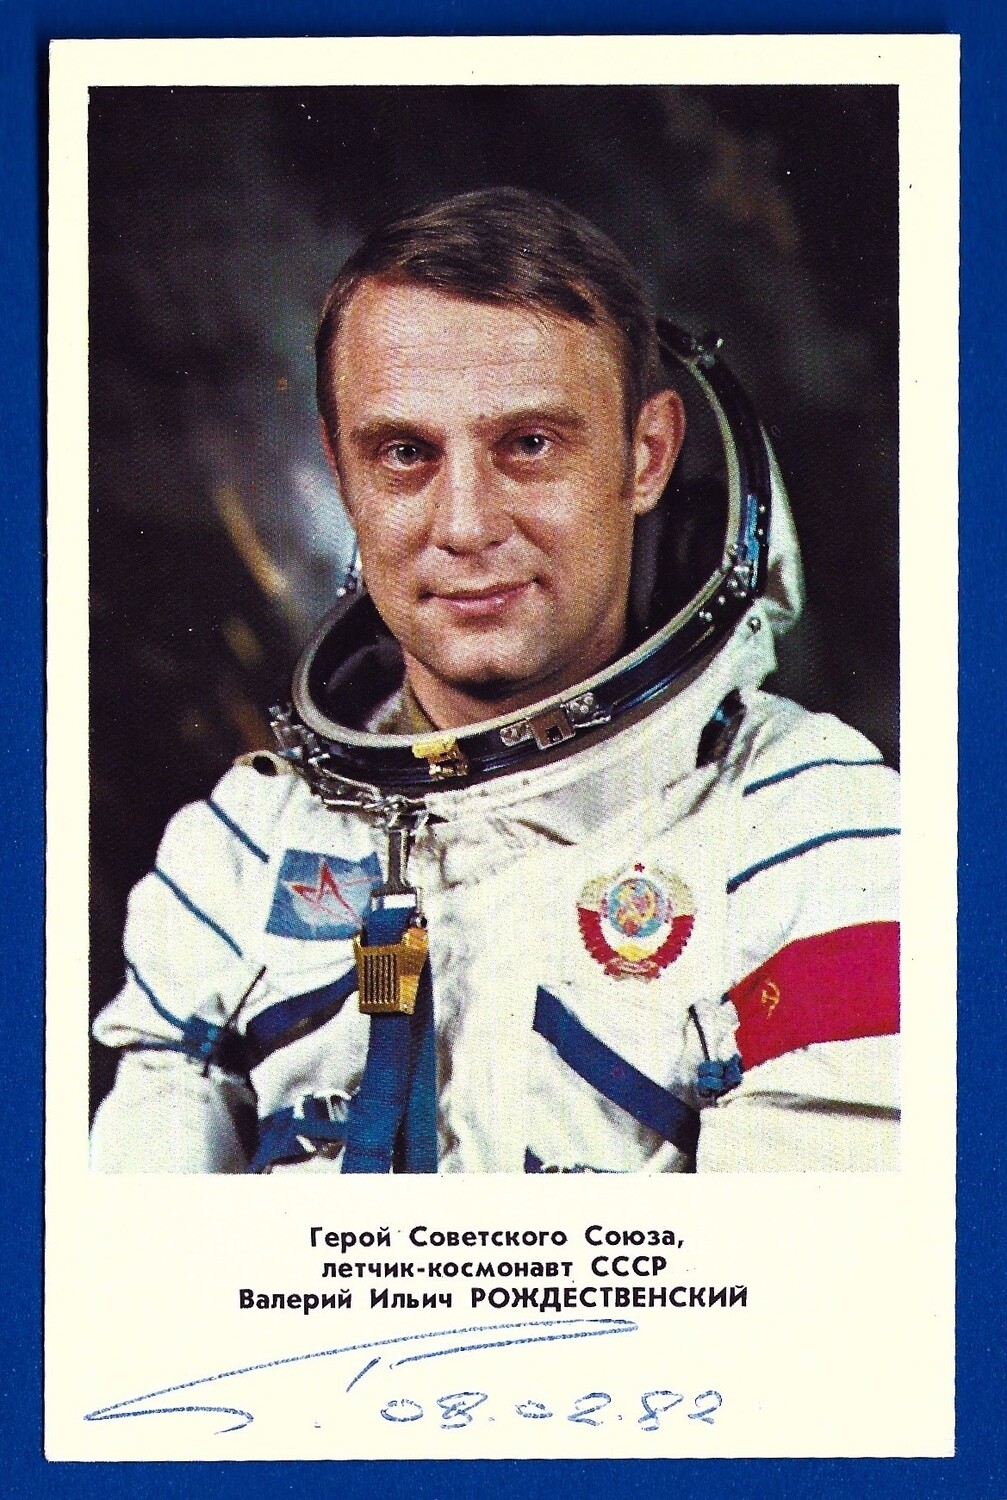 Valery Rozhdestvensky Soviet astronaut signed postcard